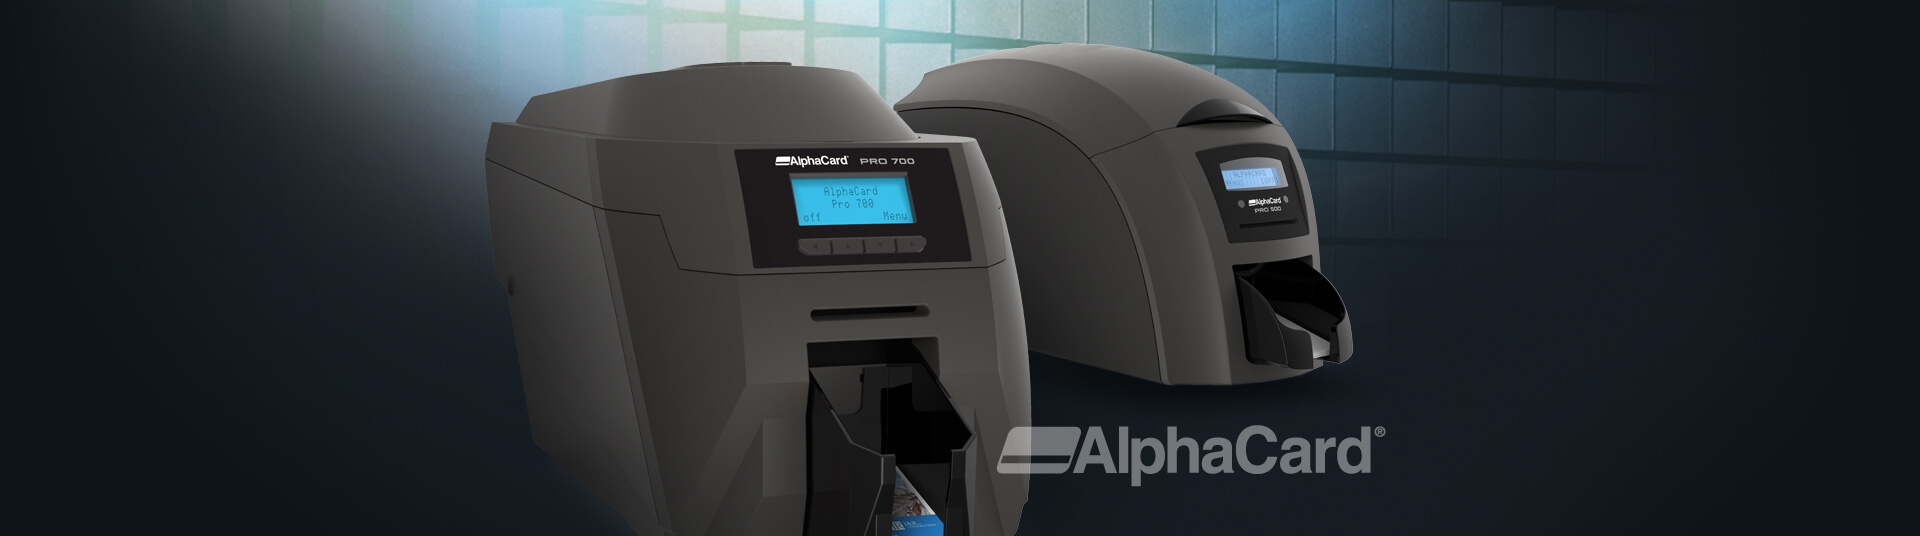 AlphaCard PRO 700 ID Card Printers